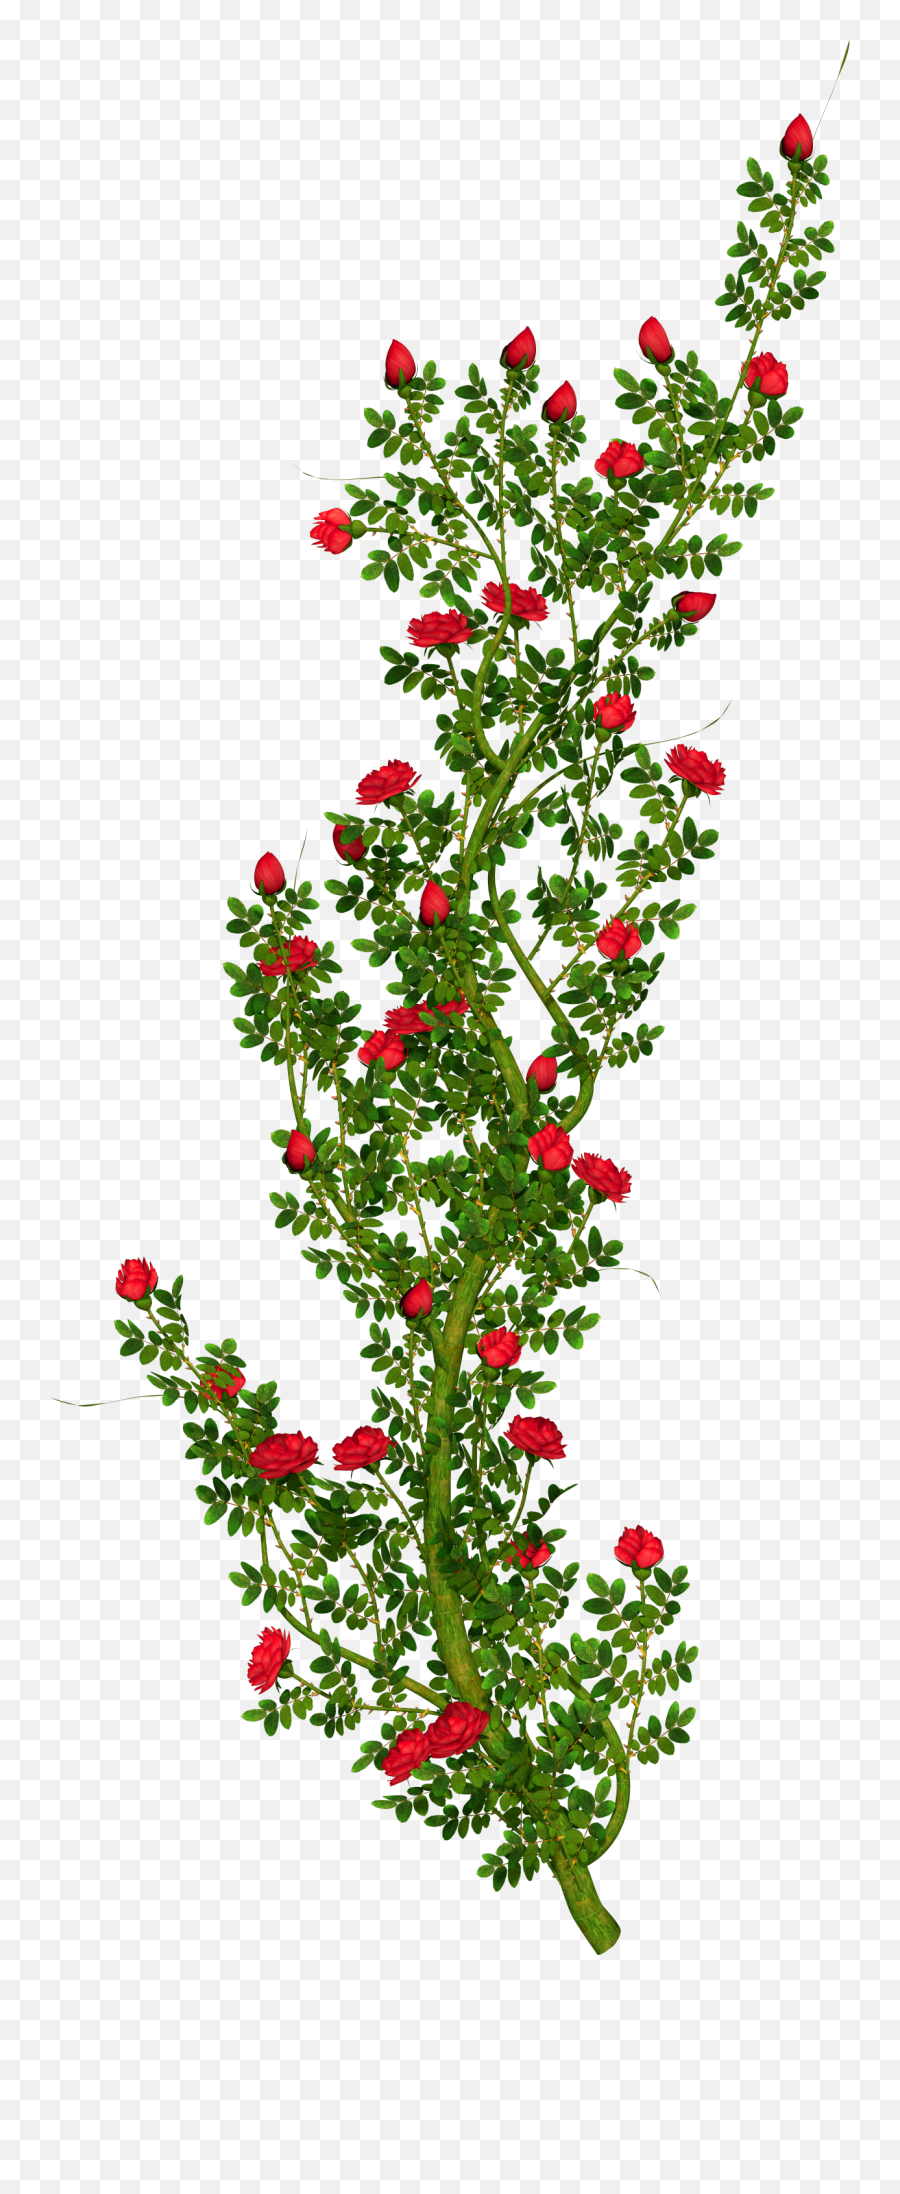 Free Flower Bush Png Download - Rose Flower Tree Png Hd,Flower Bushes Png